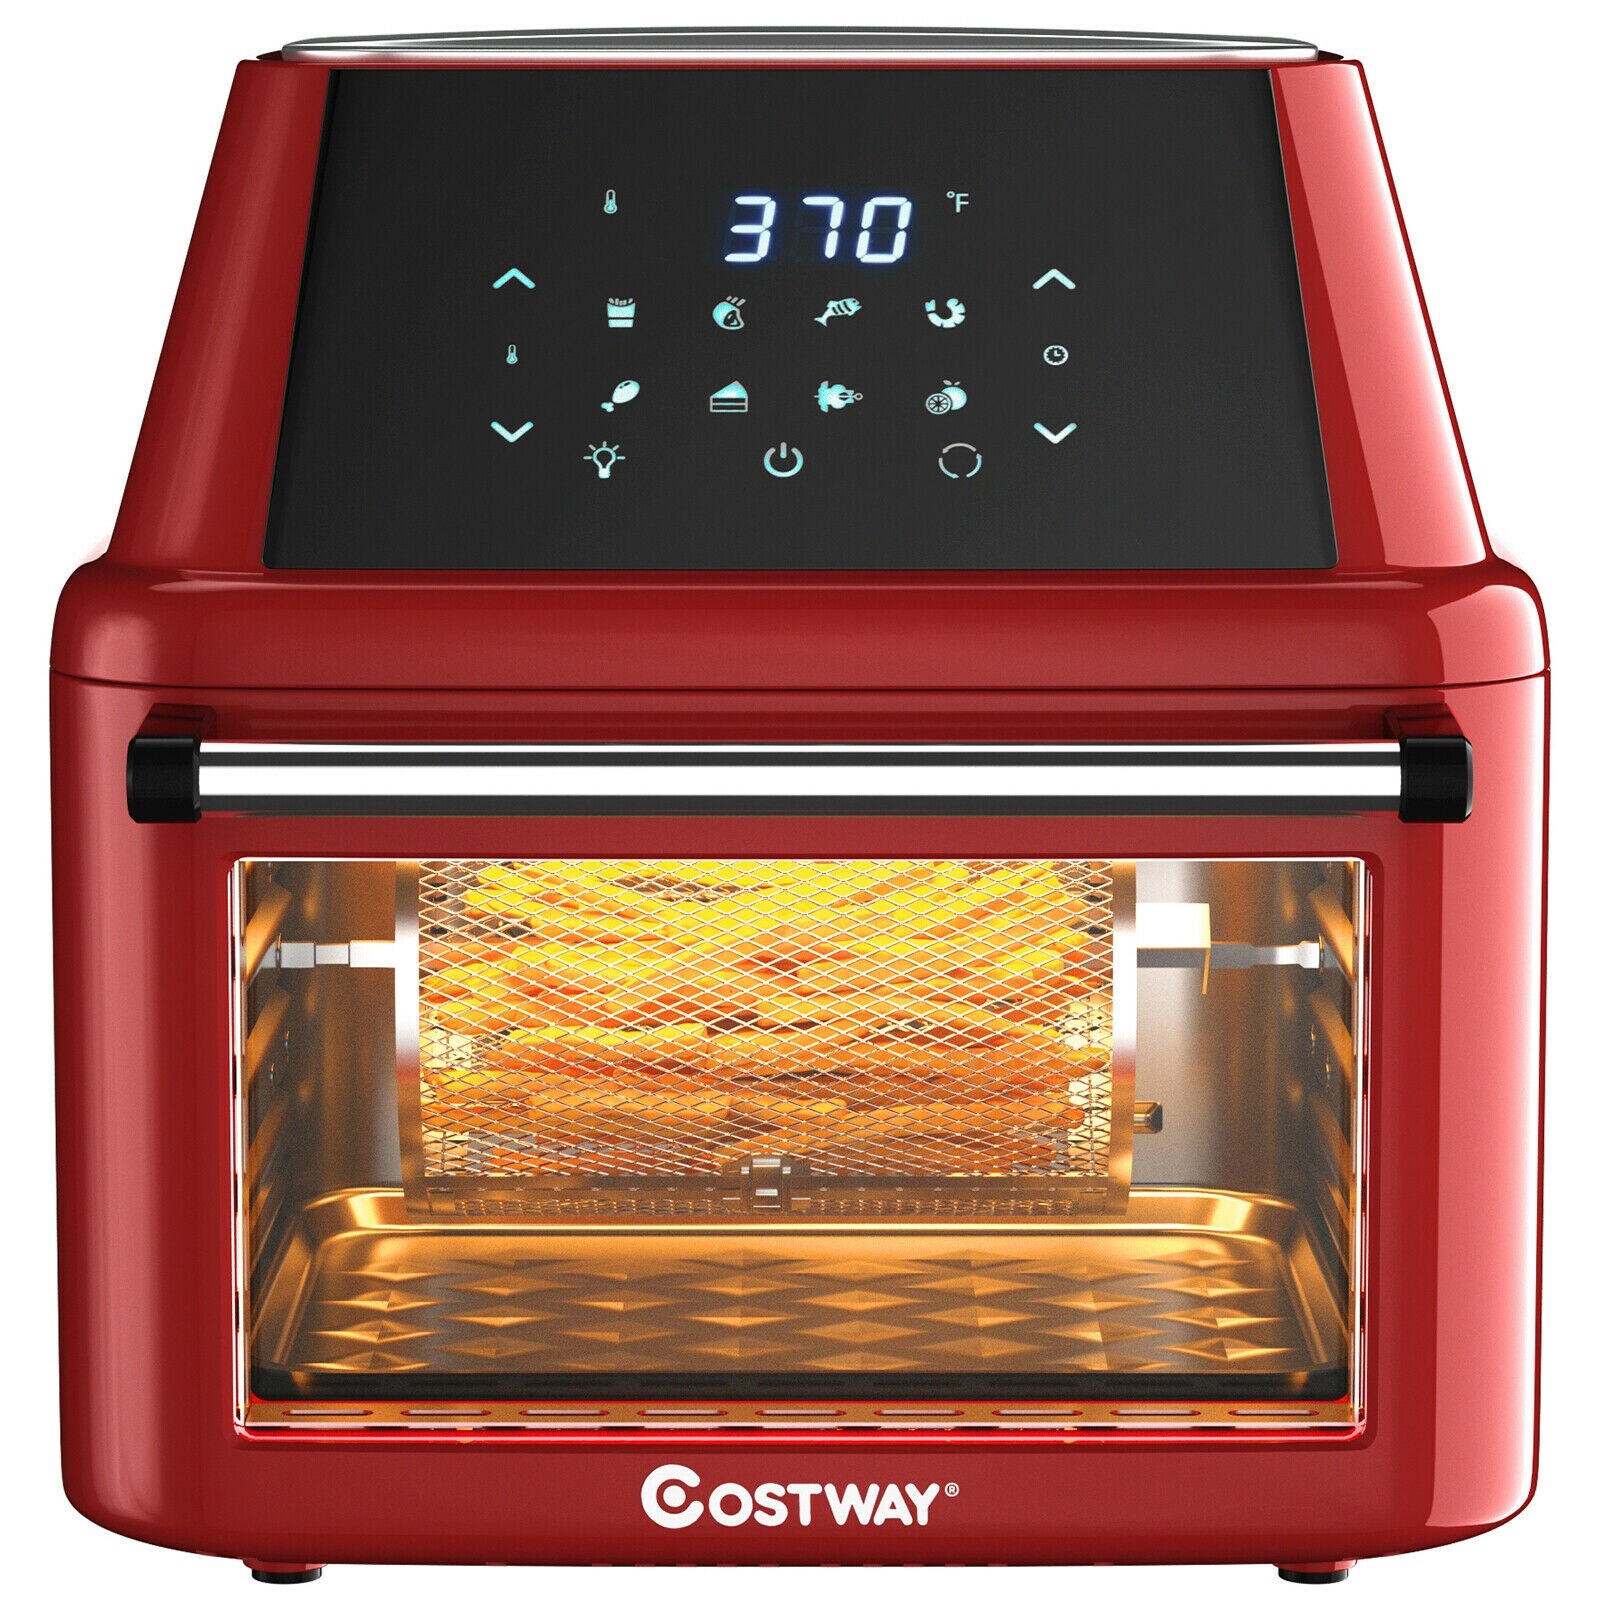 PowerXL 10-in-1 1500W 6-qt Pro XLT Air Fryer Oven w/ Rotisserie CHOOSE COLOR 